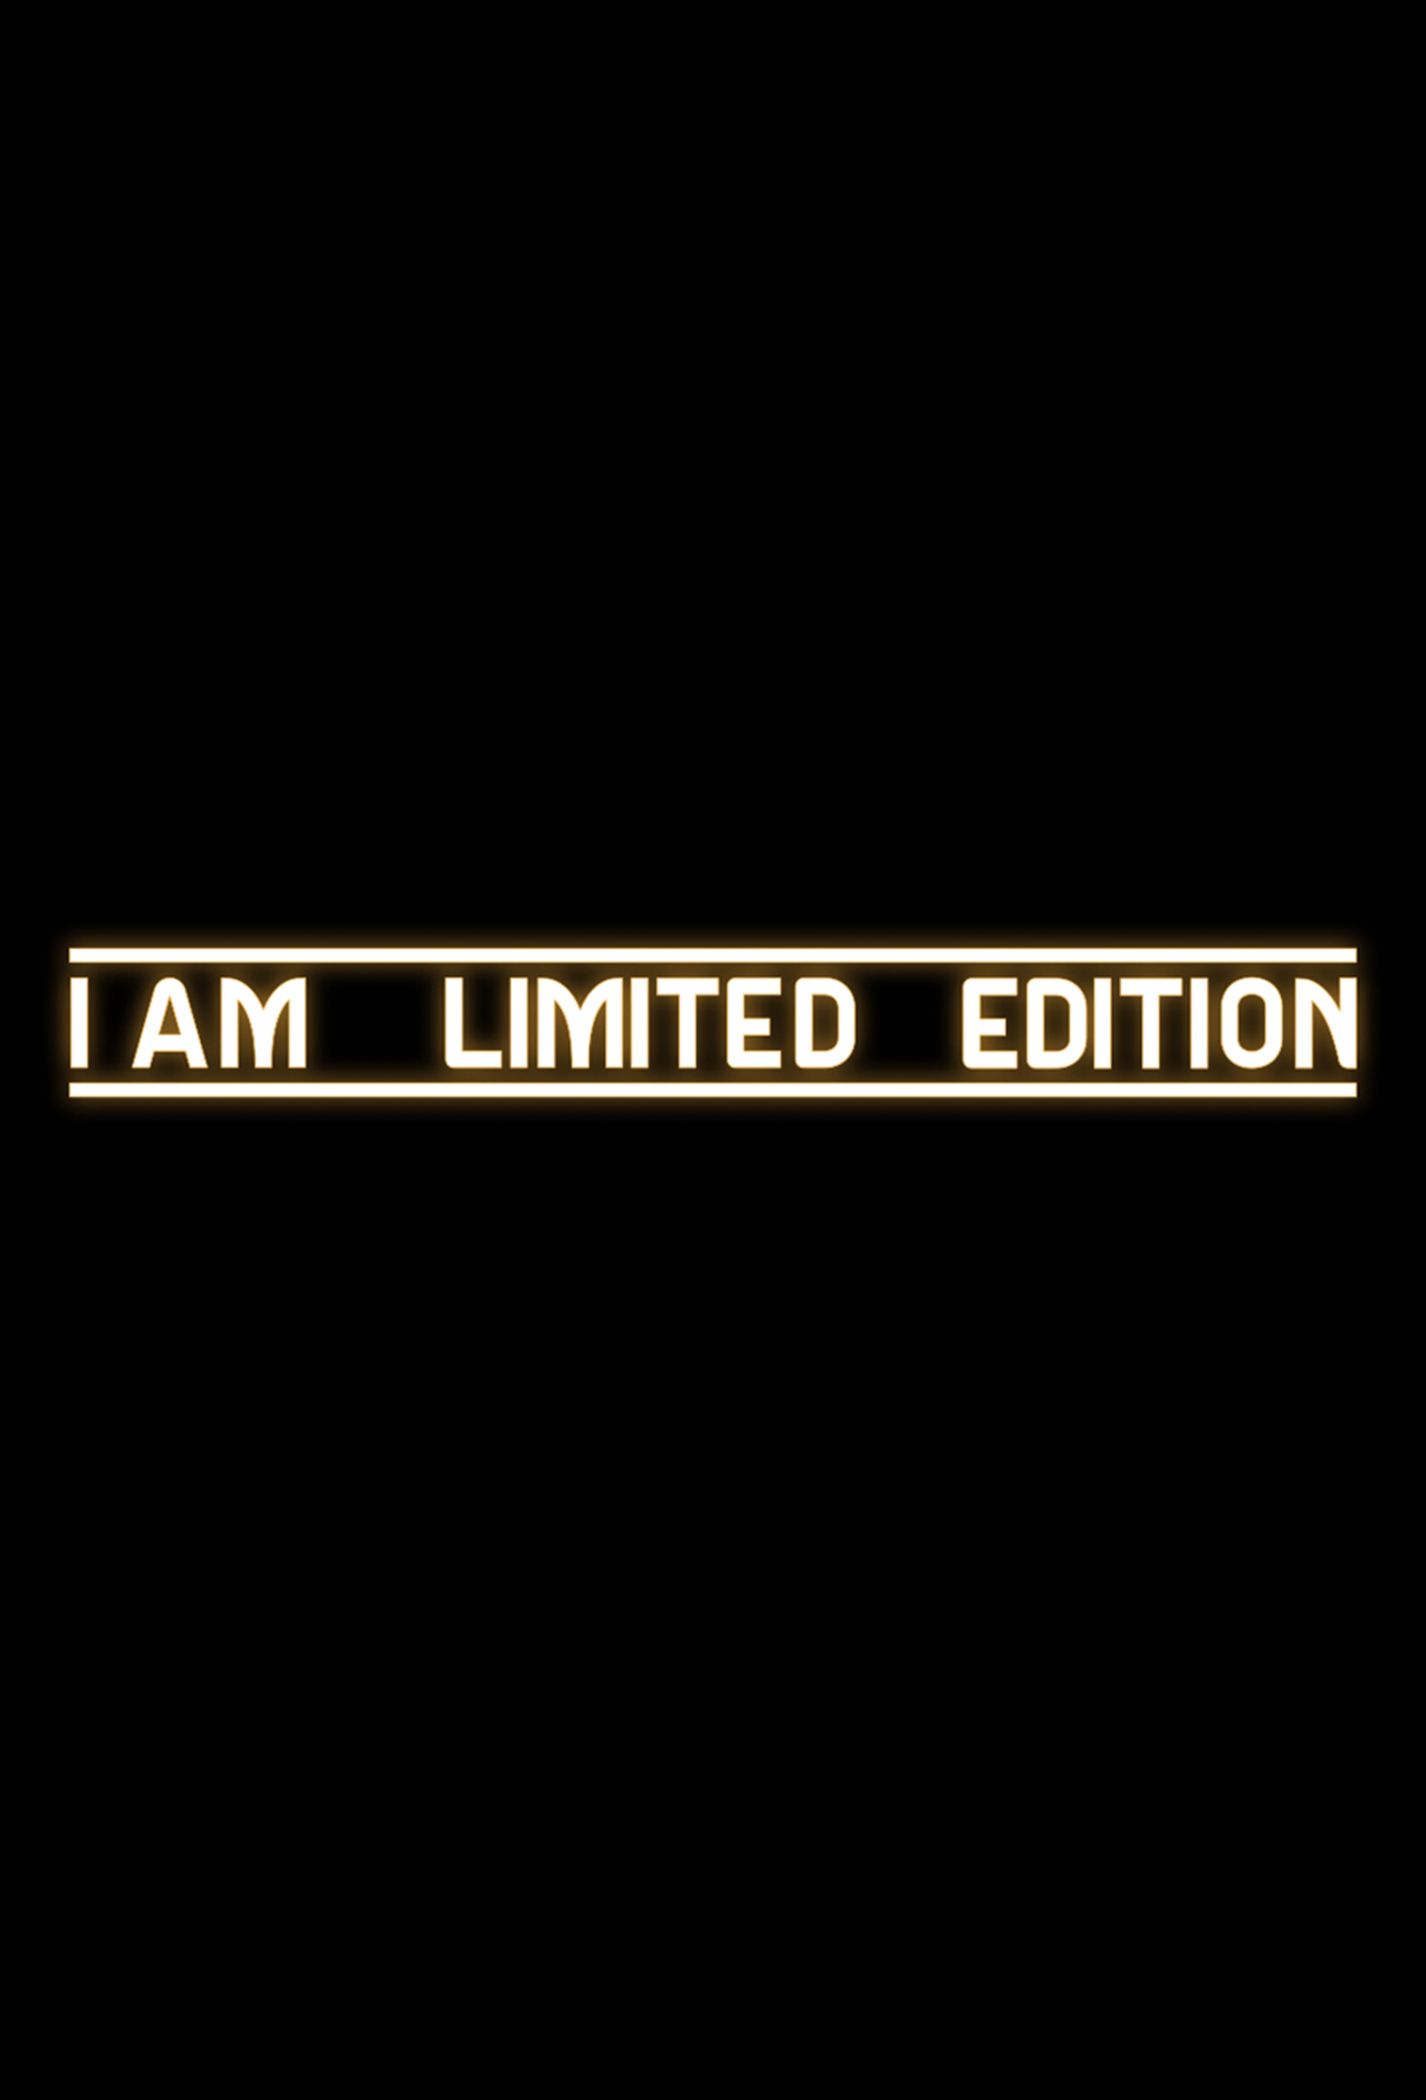 Áo thun Cotton Compact in "I AM LIMITED" in phản quang - Màu đen  2